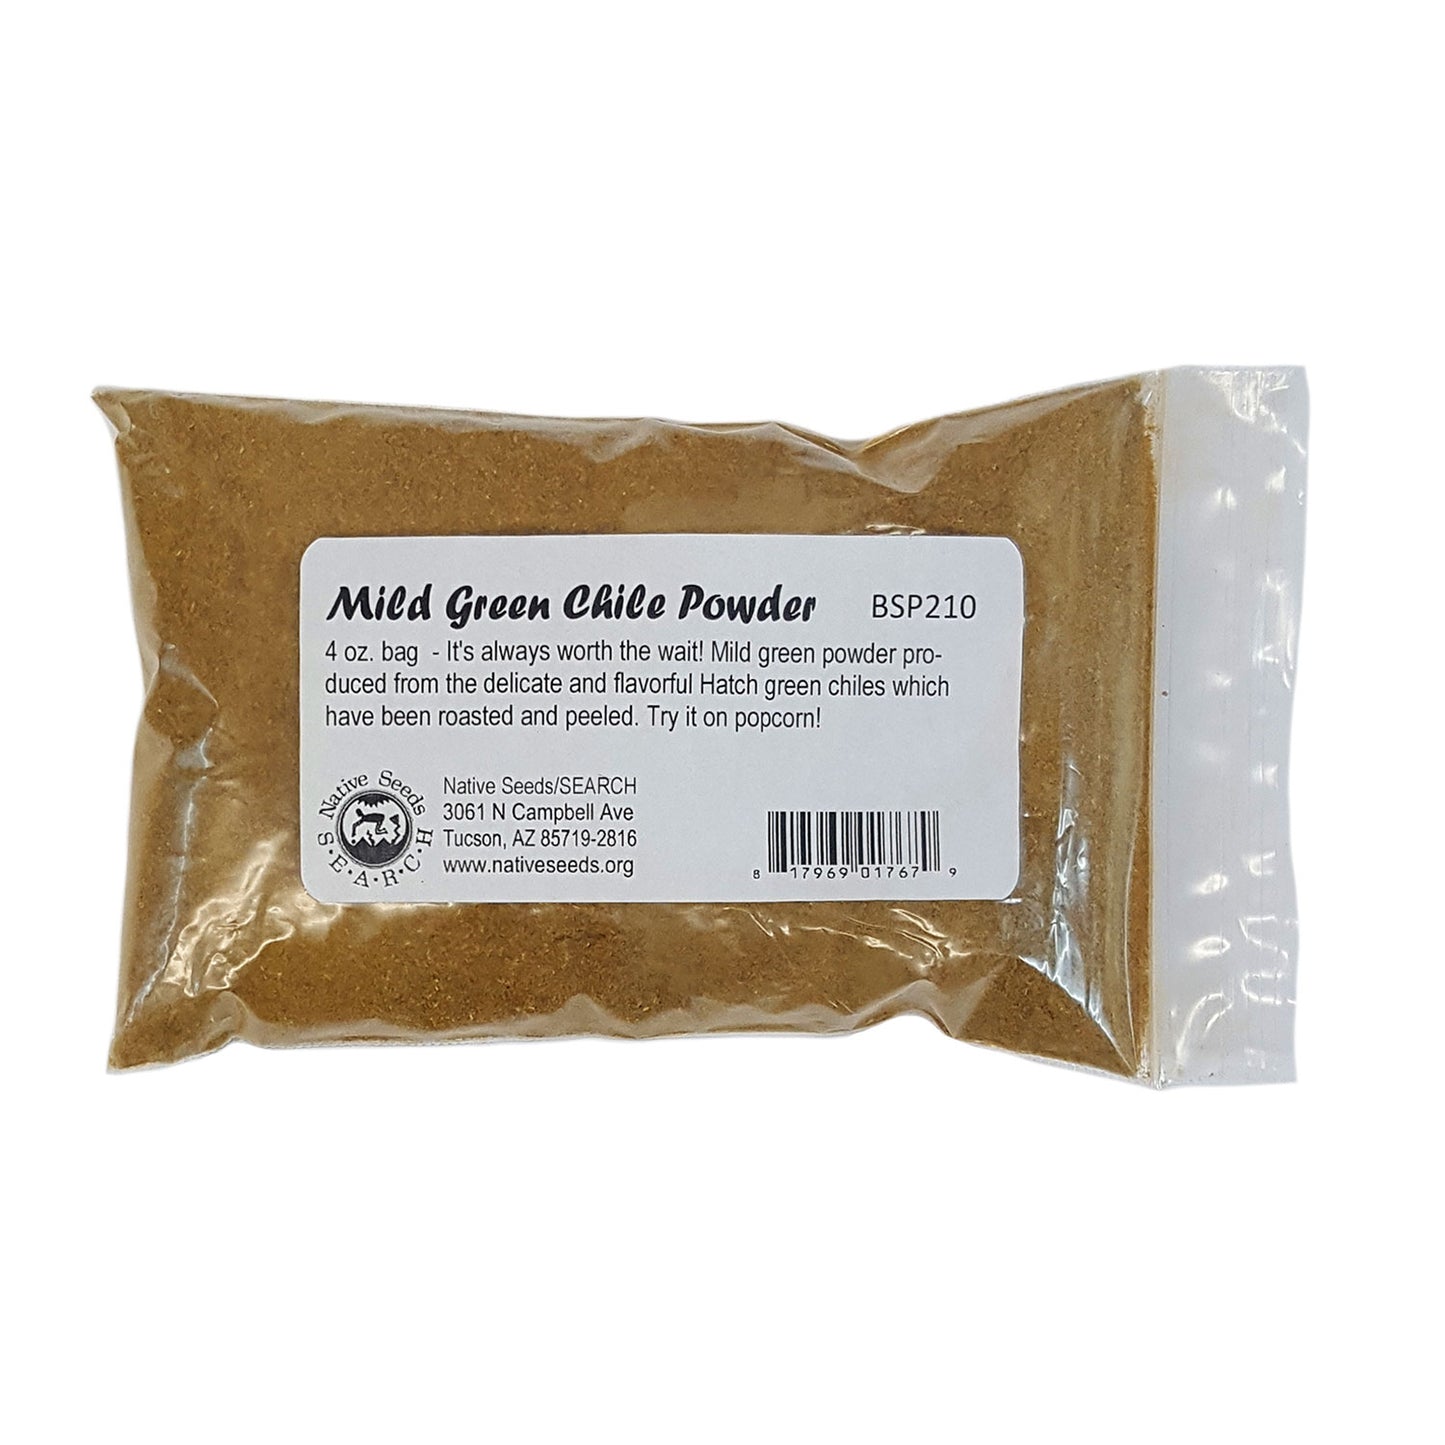 Green Chile Powder - MILD